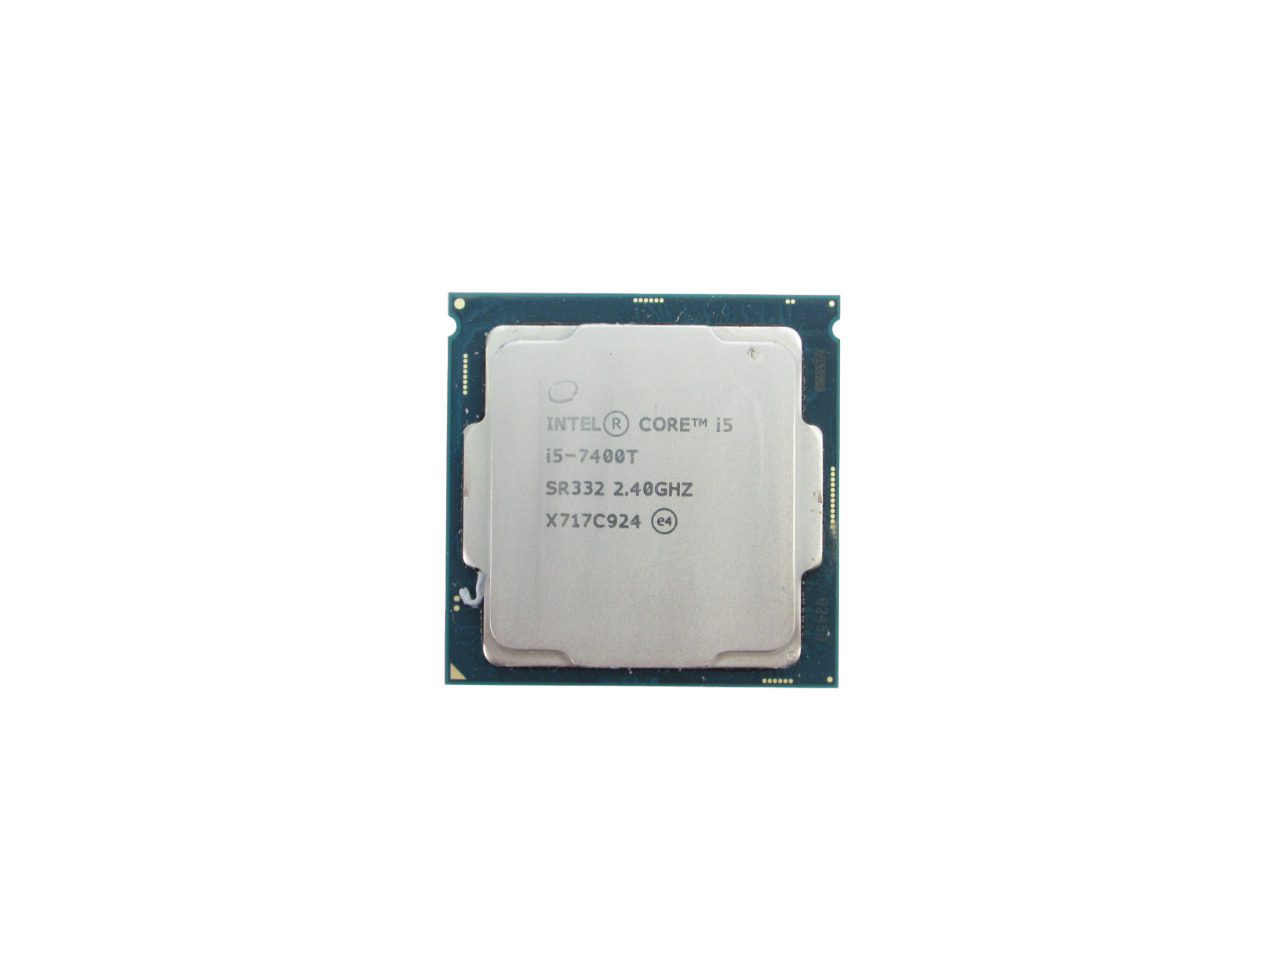 Intel Core i5-7400T SR332 2.40 GHz Quad-Core LGA1151 6MB Cache CPU Processor